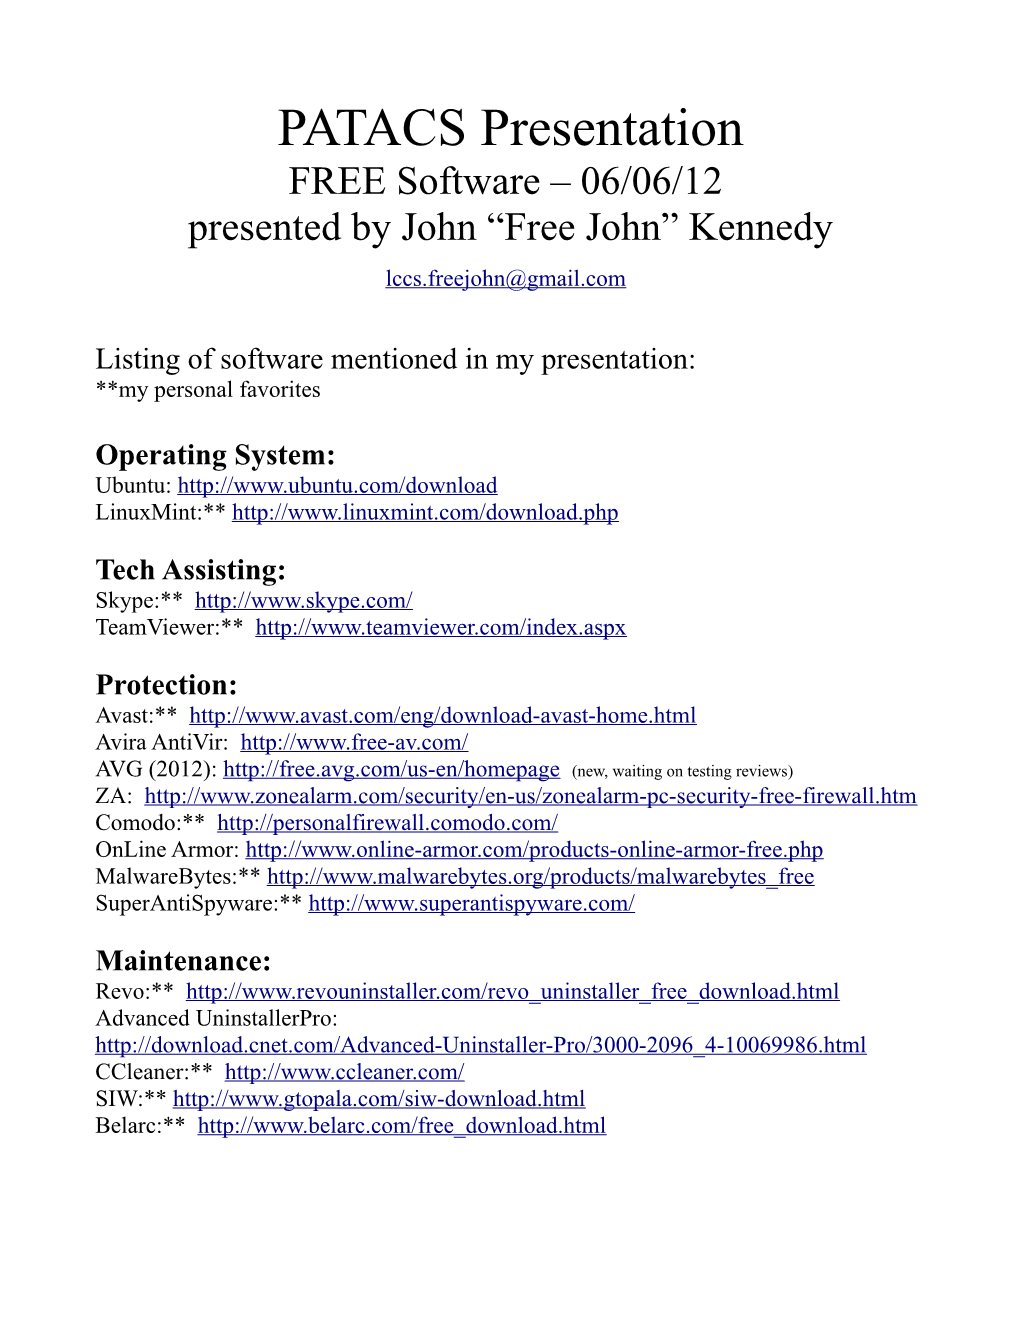 PATACS Presentation FREE Software – 06/06/12 Presented by John “Free John” Kennedy Lccs.Freejohn@Gmail.Com